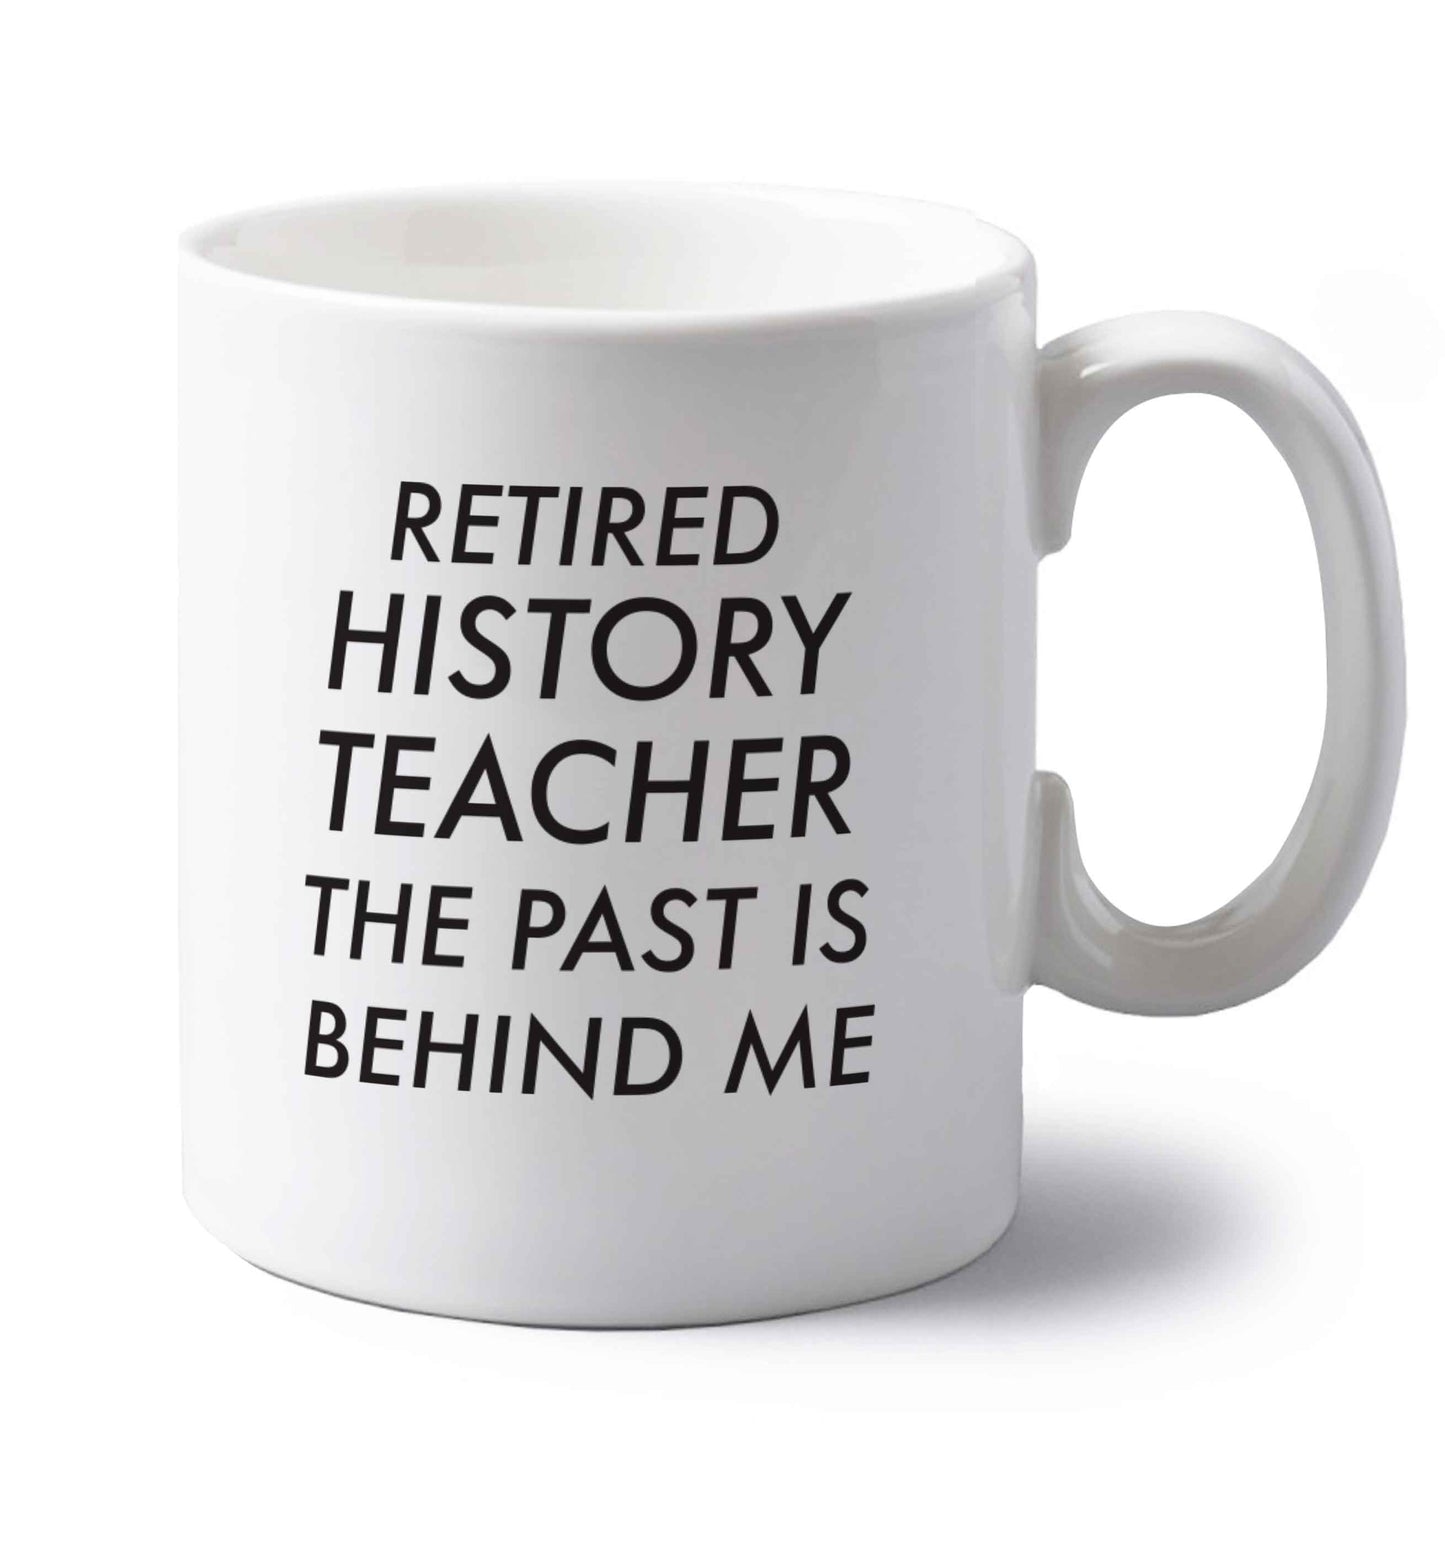 Retired history teacher the past is behind me left handed white ceramic mug 